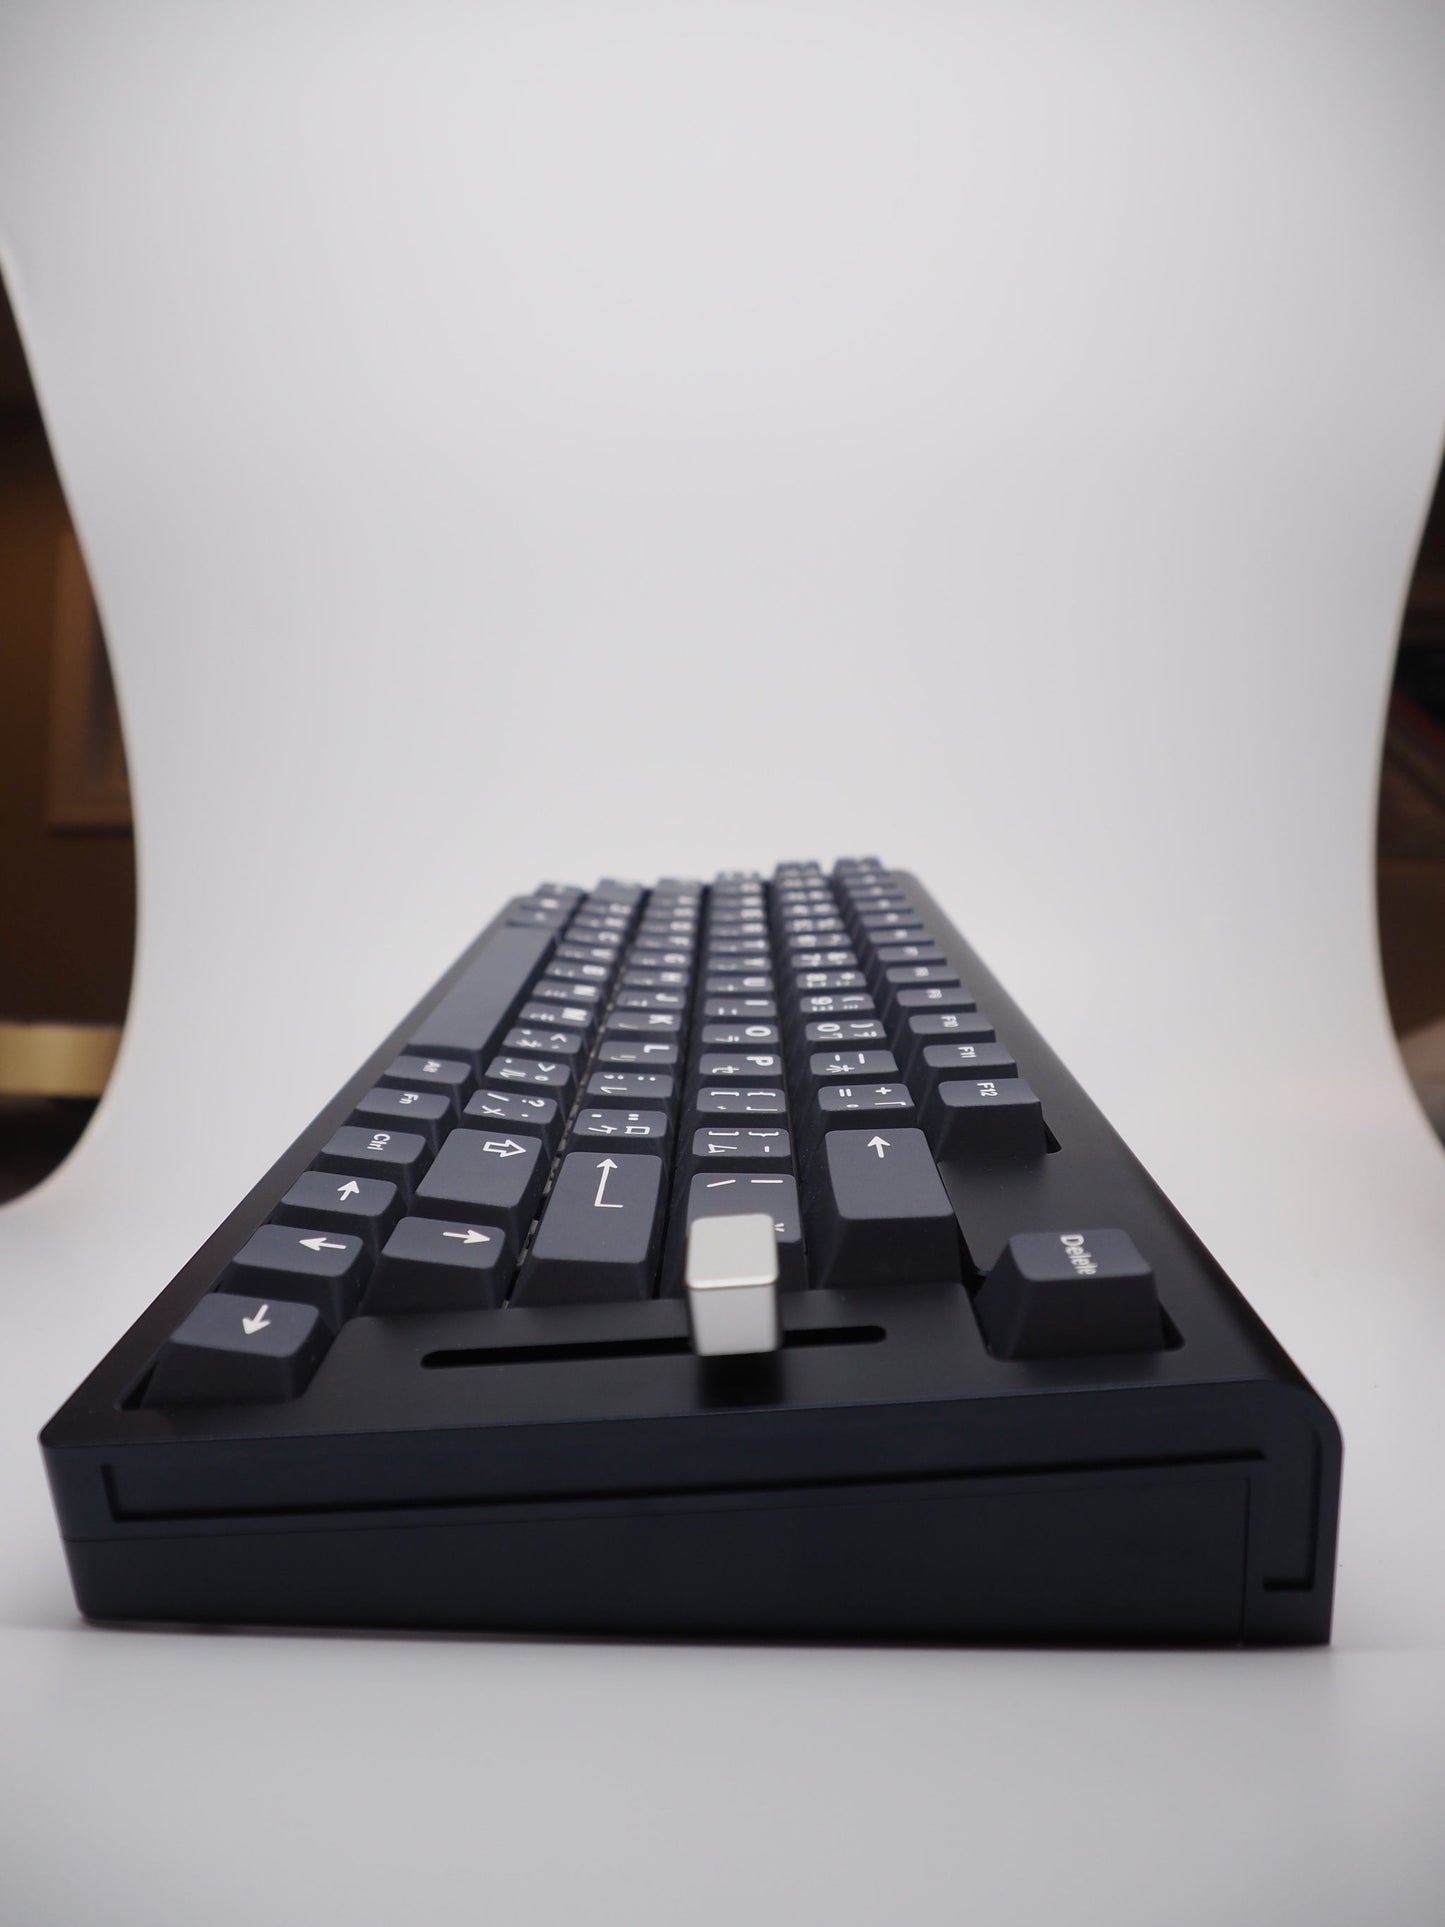 
                  
                    (Group Buy) FjordBoard 75% Keyboard Kit
                  
                